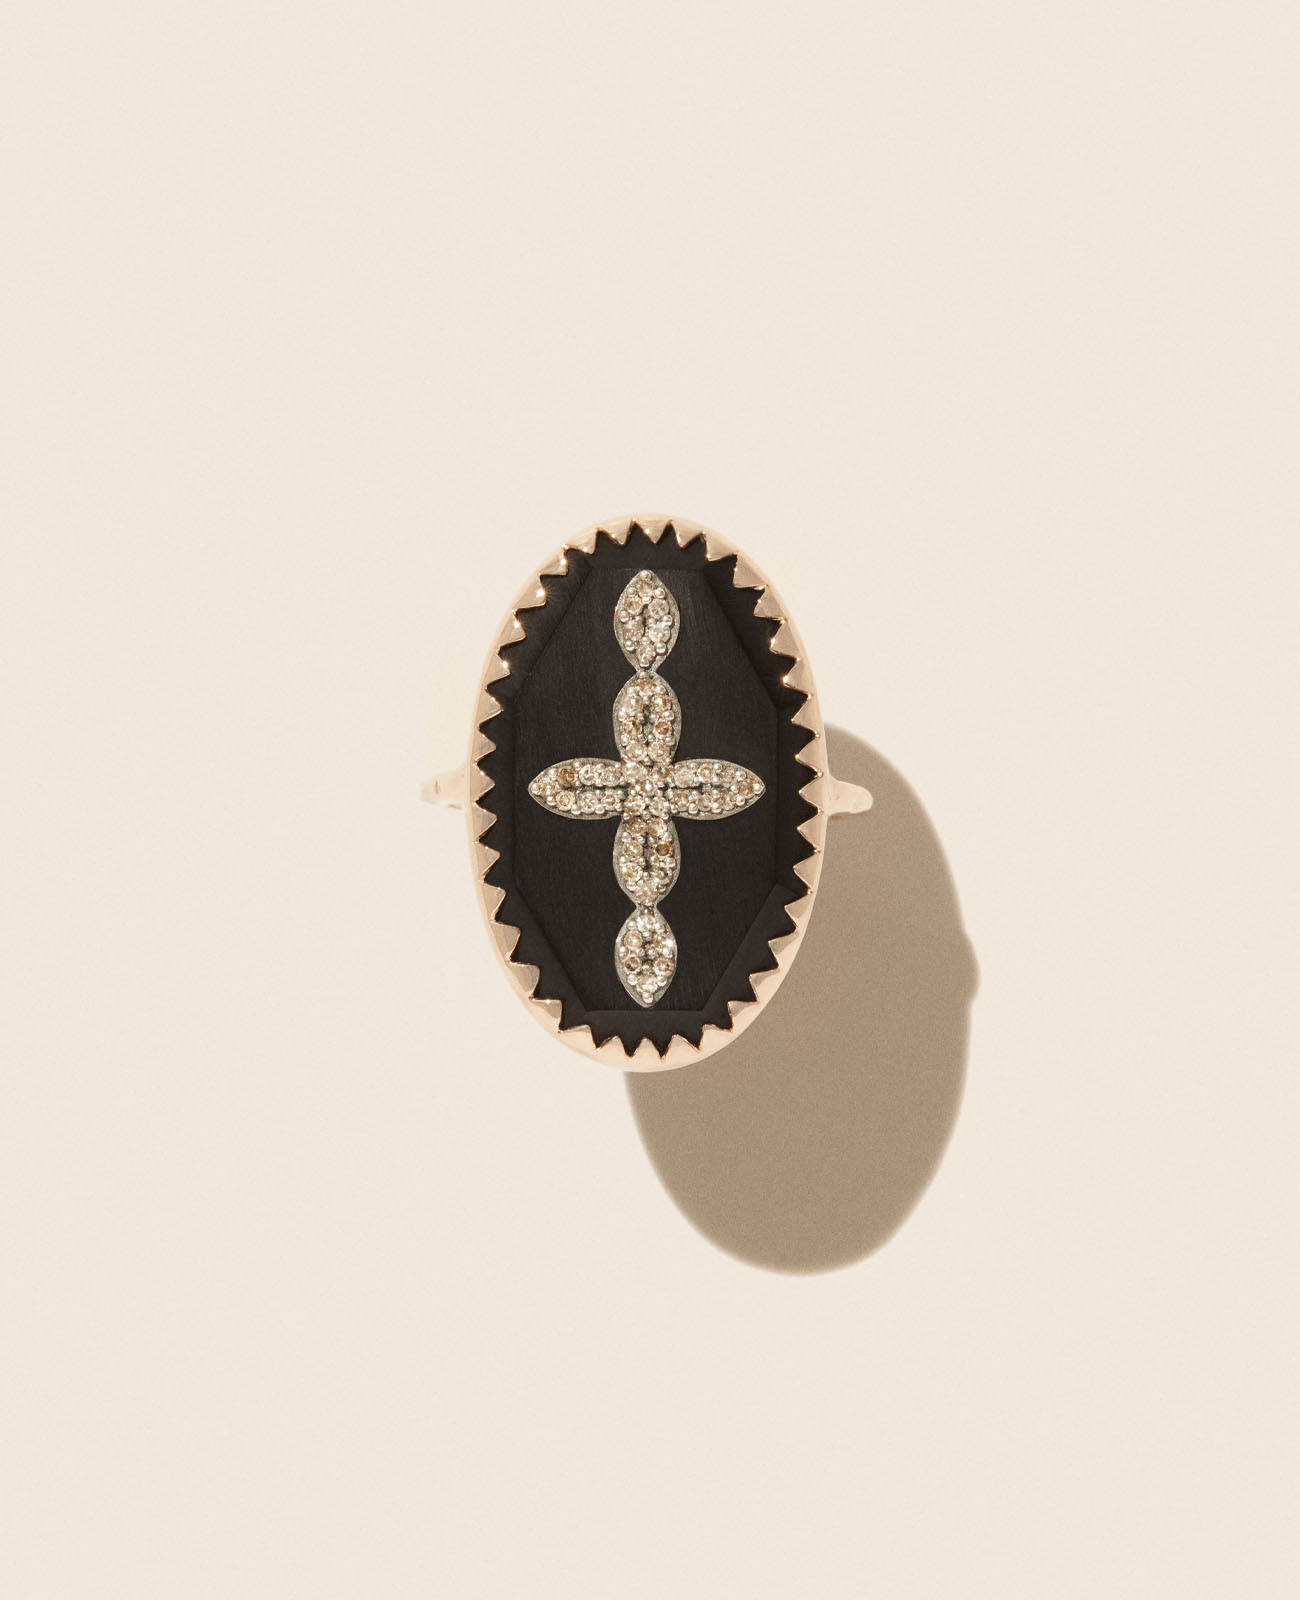 BOWIE N°3 BLACK DIAMOND ring pascale monvoisin jewelry paris